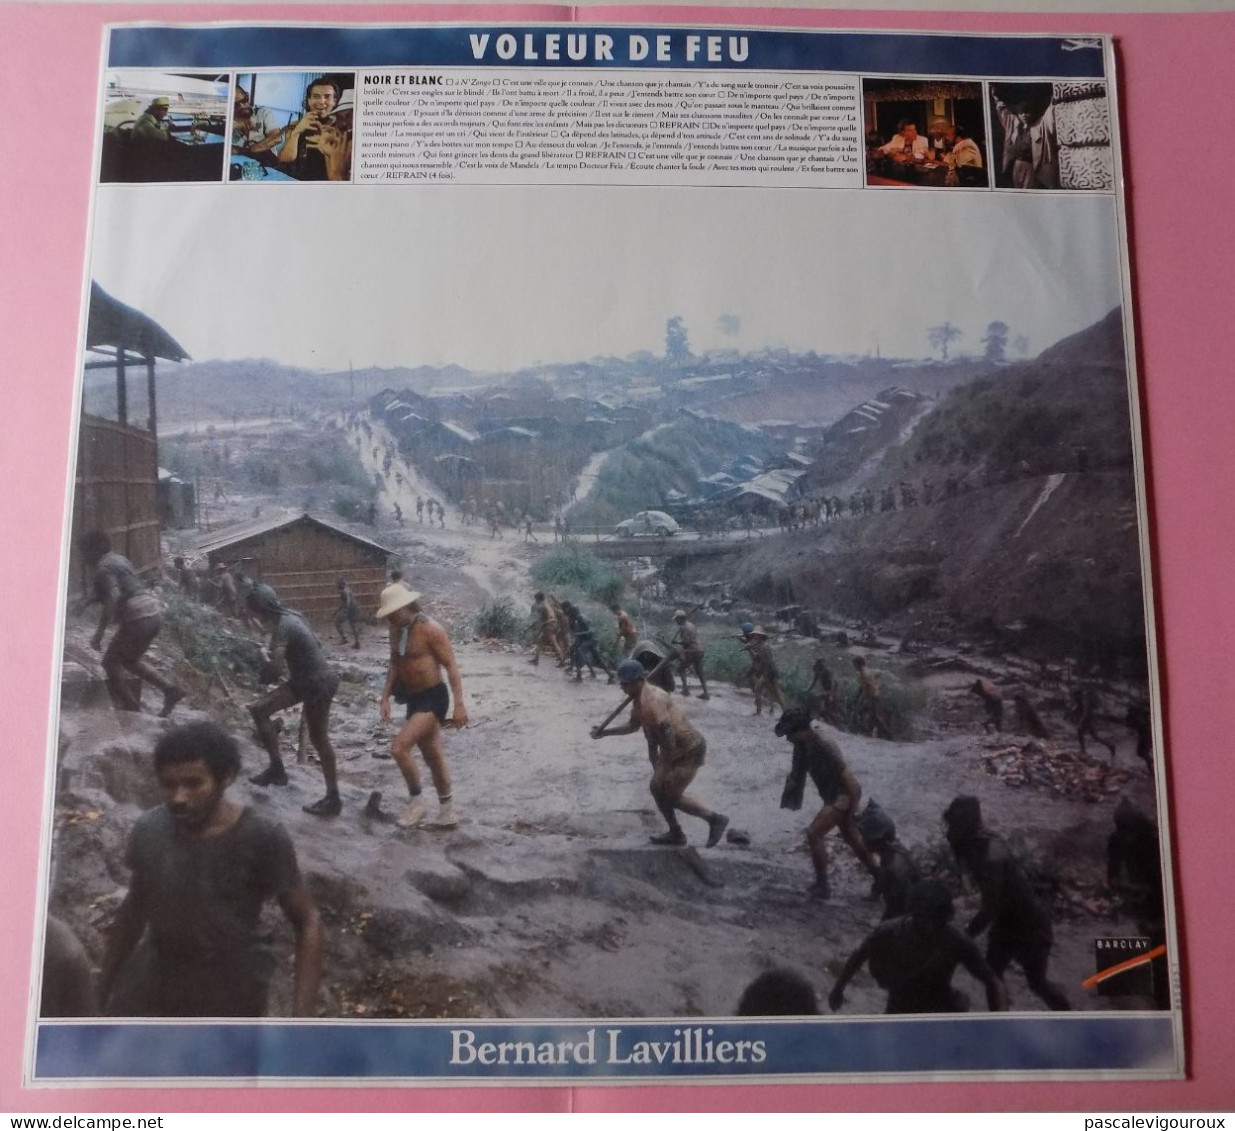 BERNARD LAVILLIERS VOLEUR DE FEU DOUBLE 33T LP 1986 BARCLAY 829.341/1 2 Disques - Otros - Canción Francesa